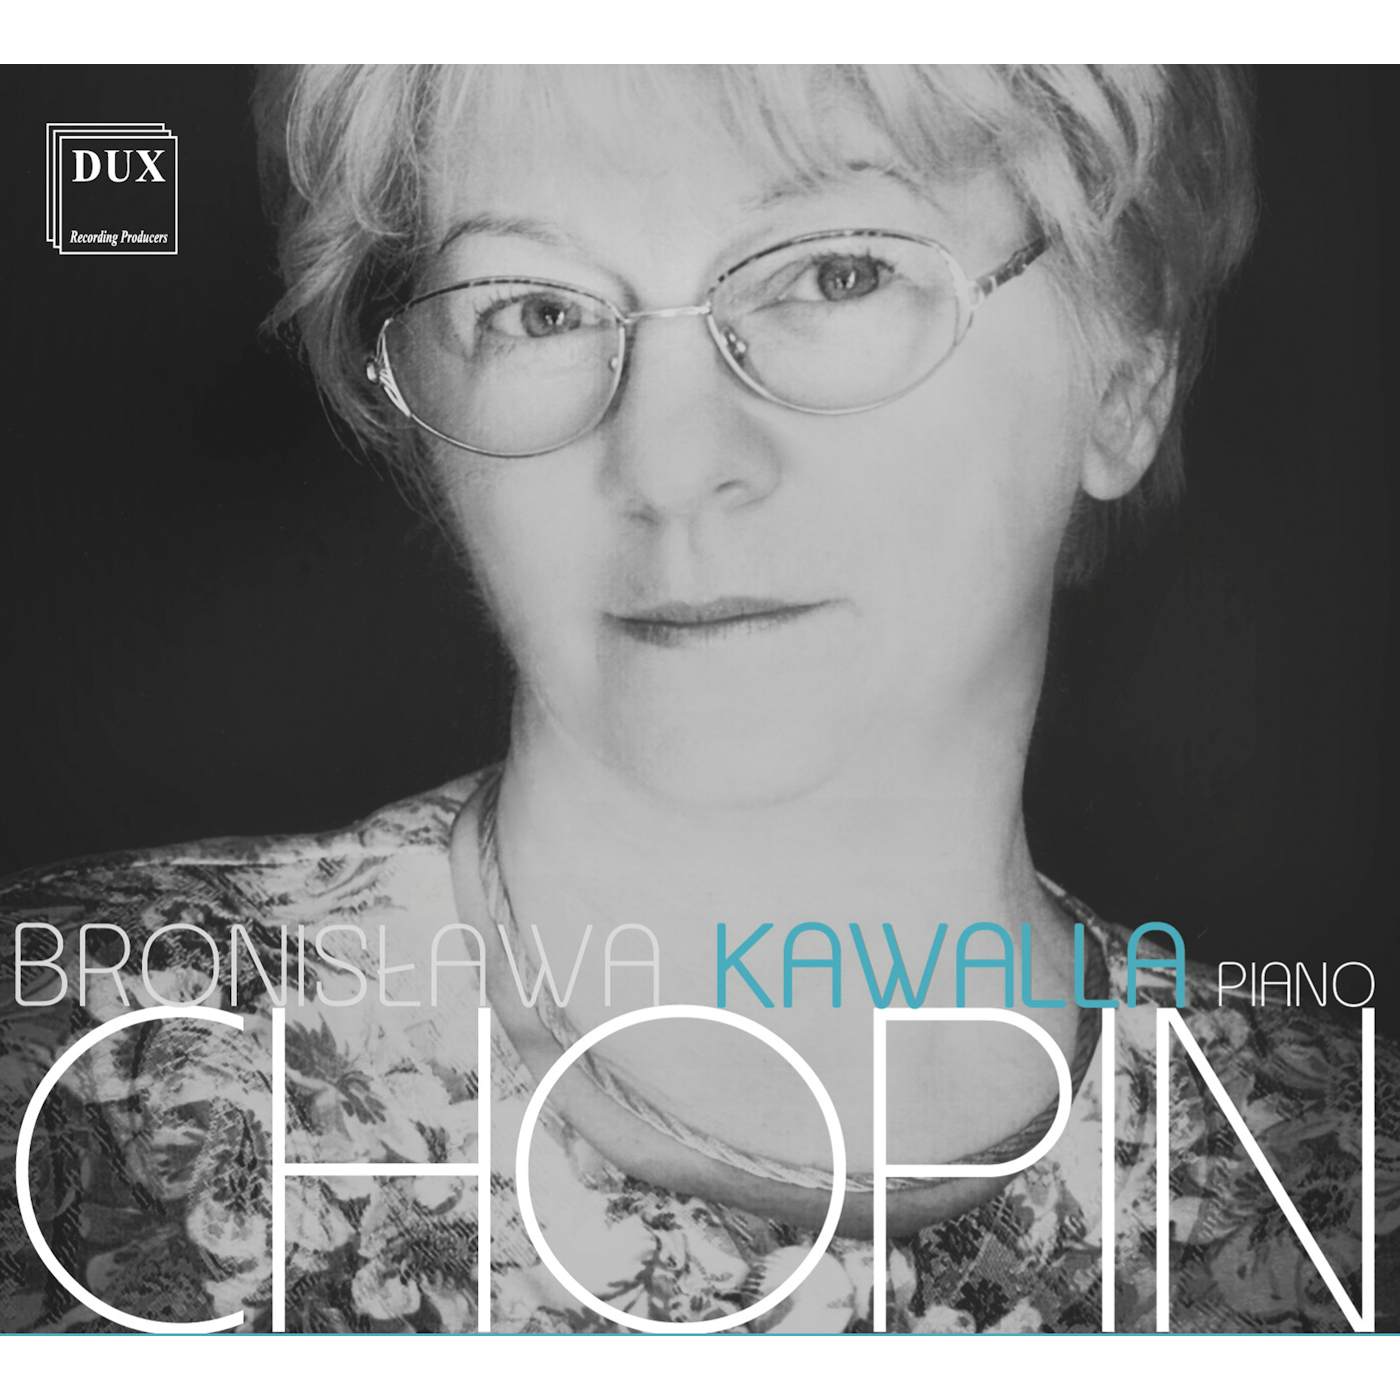 BRONISLAWA KAWALLA PLAYS FREDERIC Frédéric Chopin CD